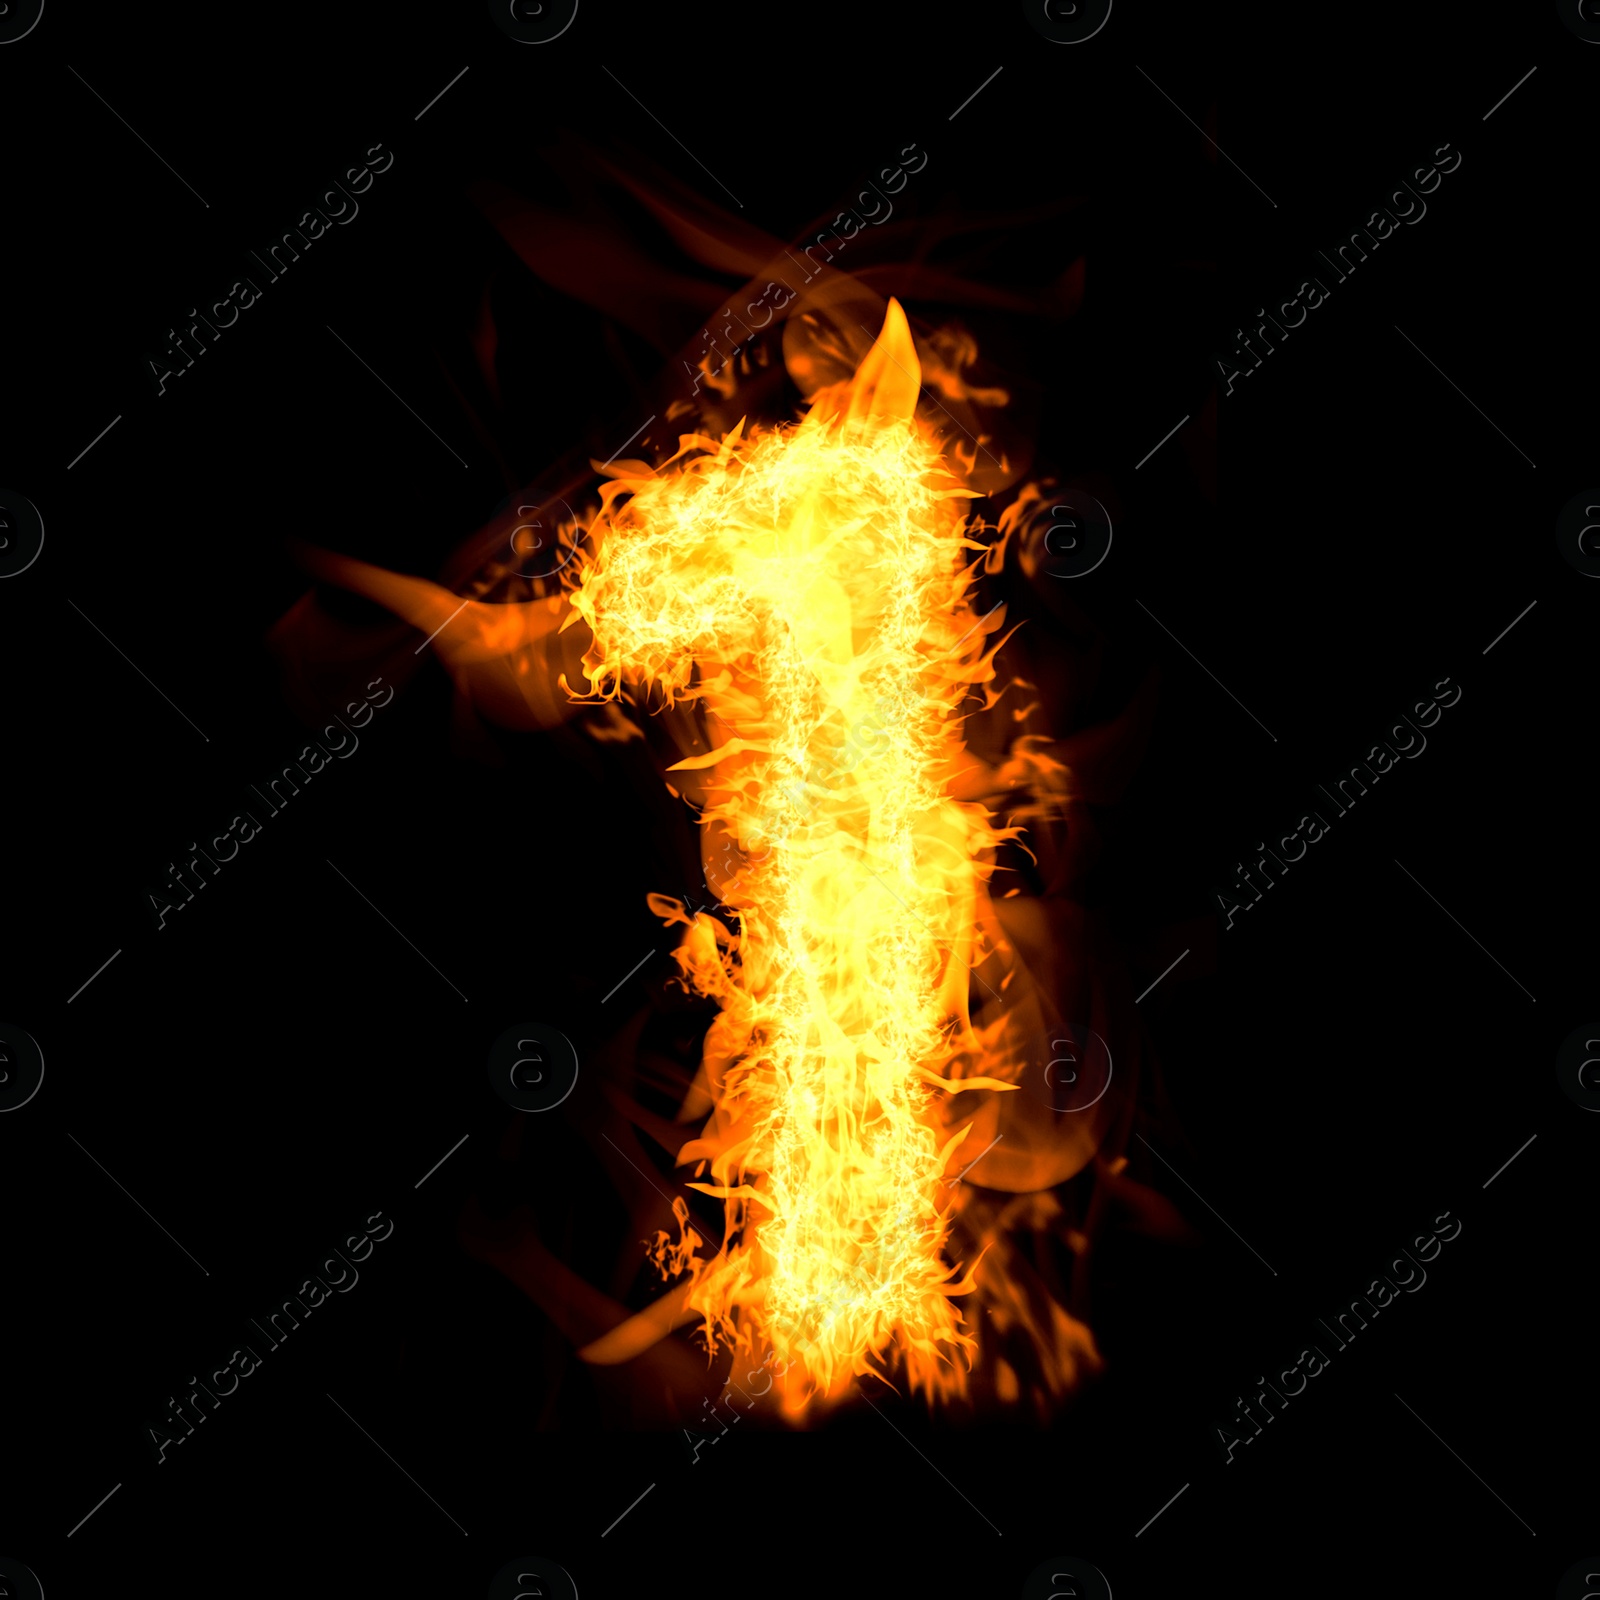 Image of Flaming 1 on black background. Stylized number design